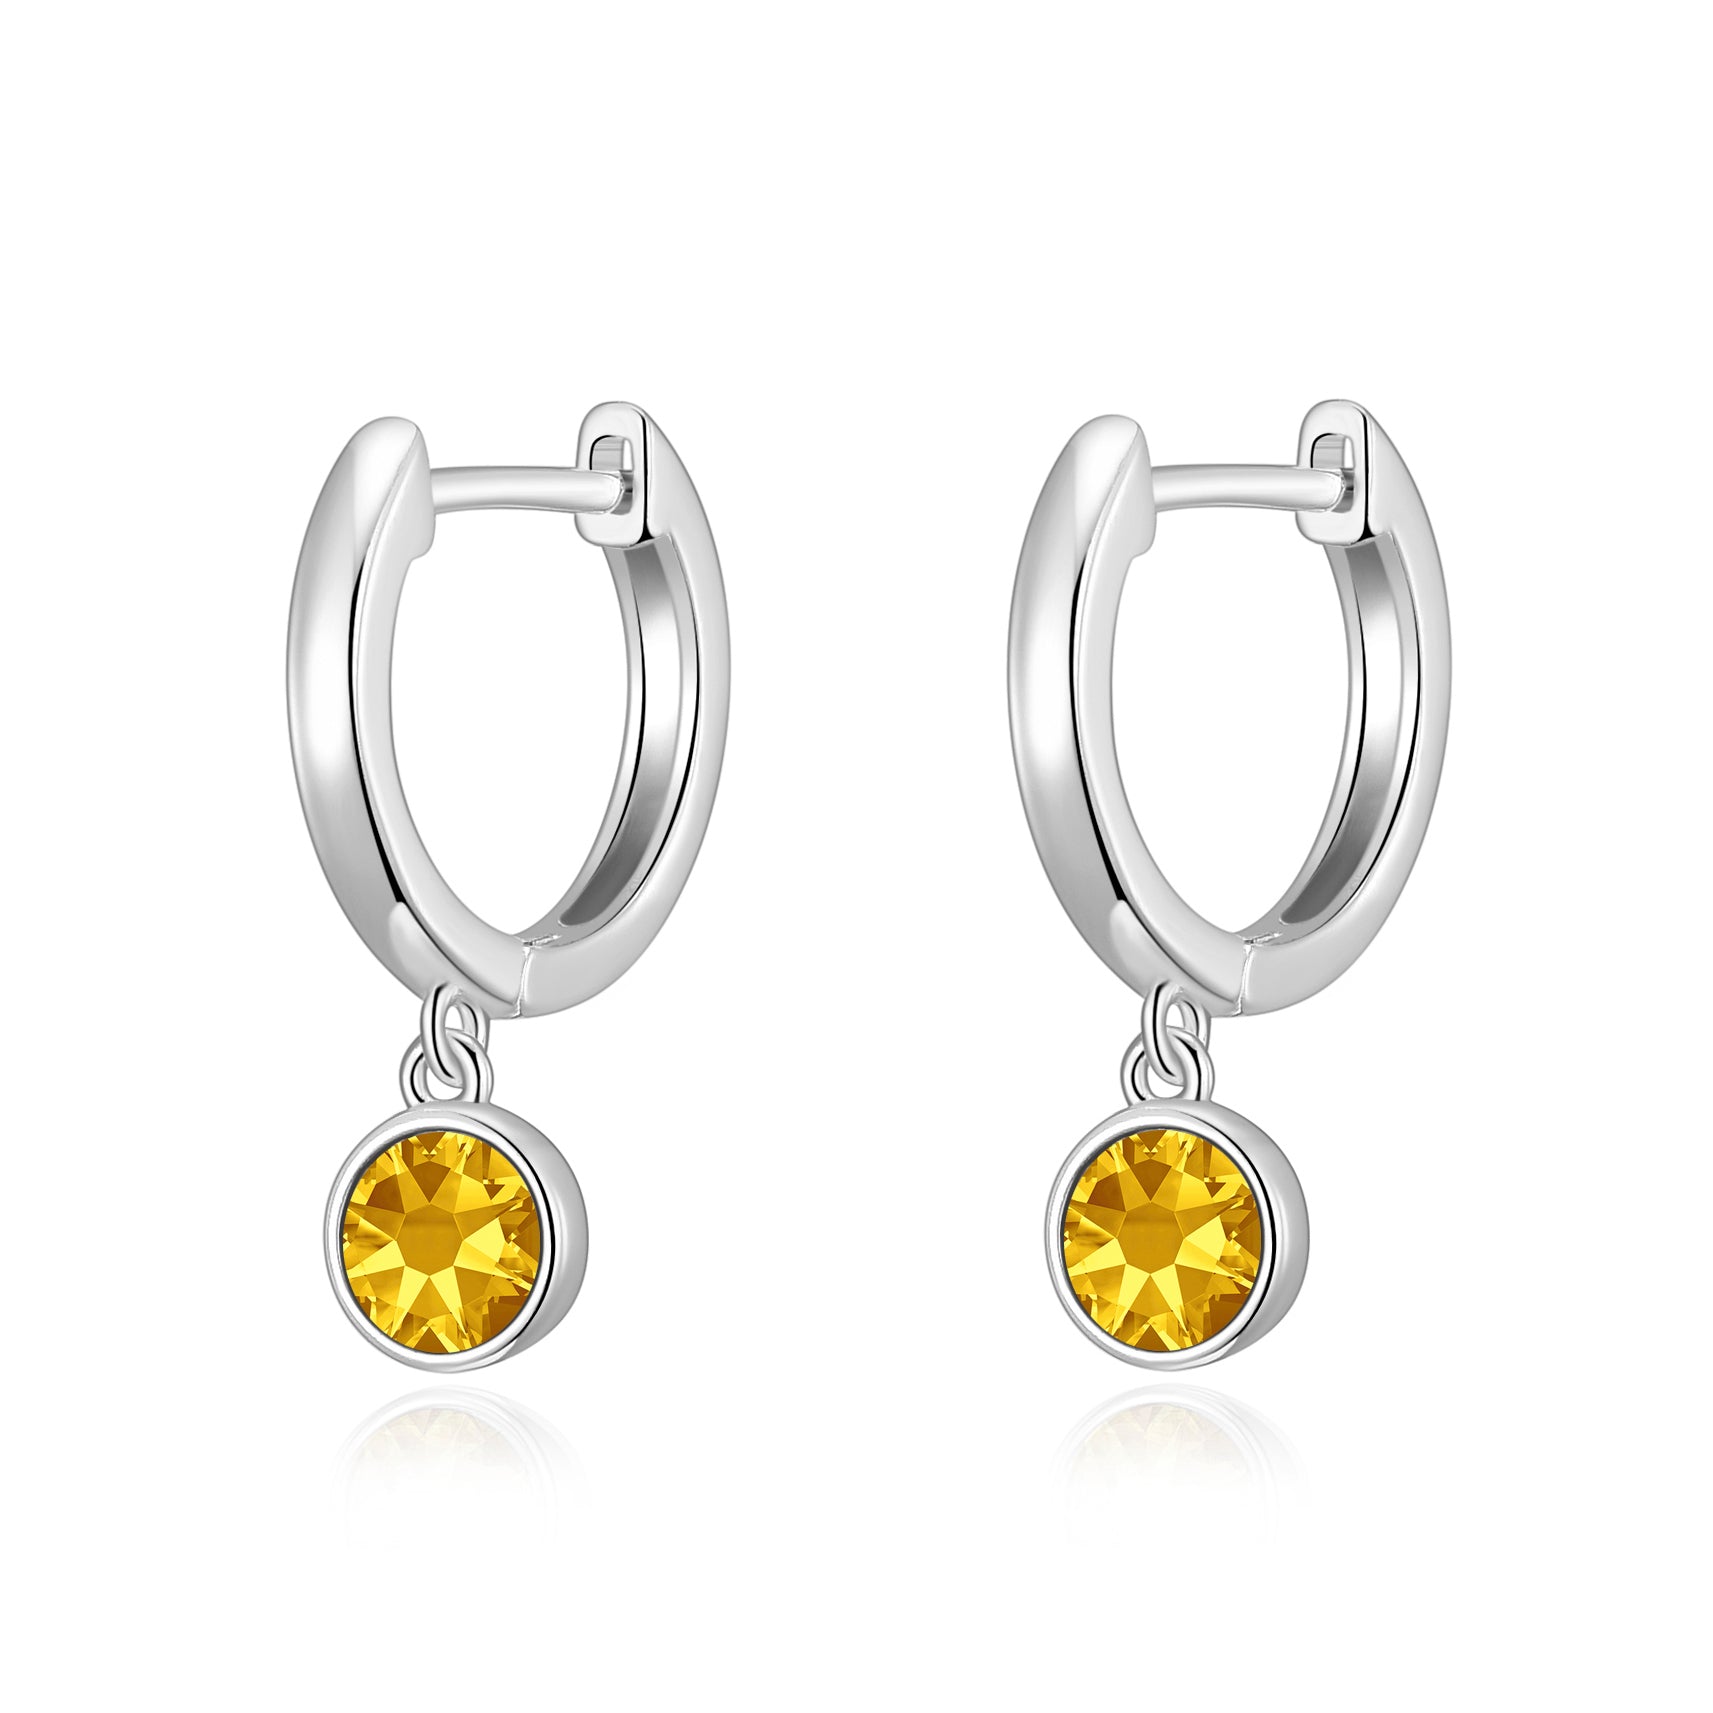 Yellow Crystal Hoop Earrings Created with Zircondia® Crystals by Philip Jones Jewellery